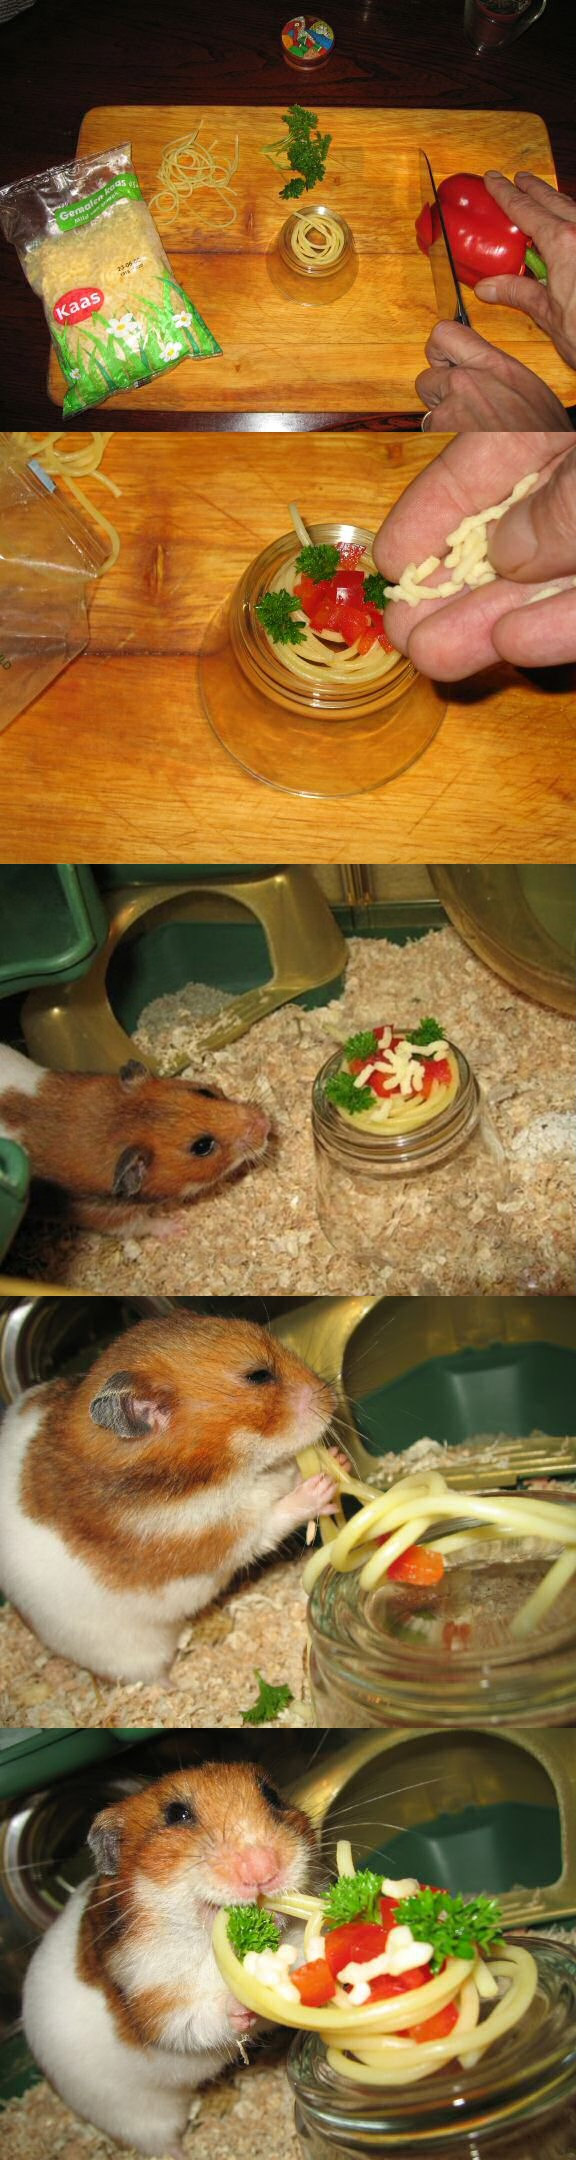 Hamster comiendo pasta